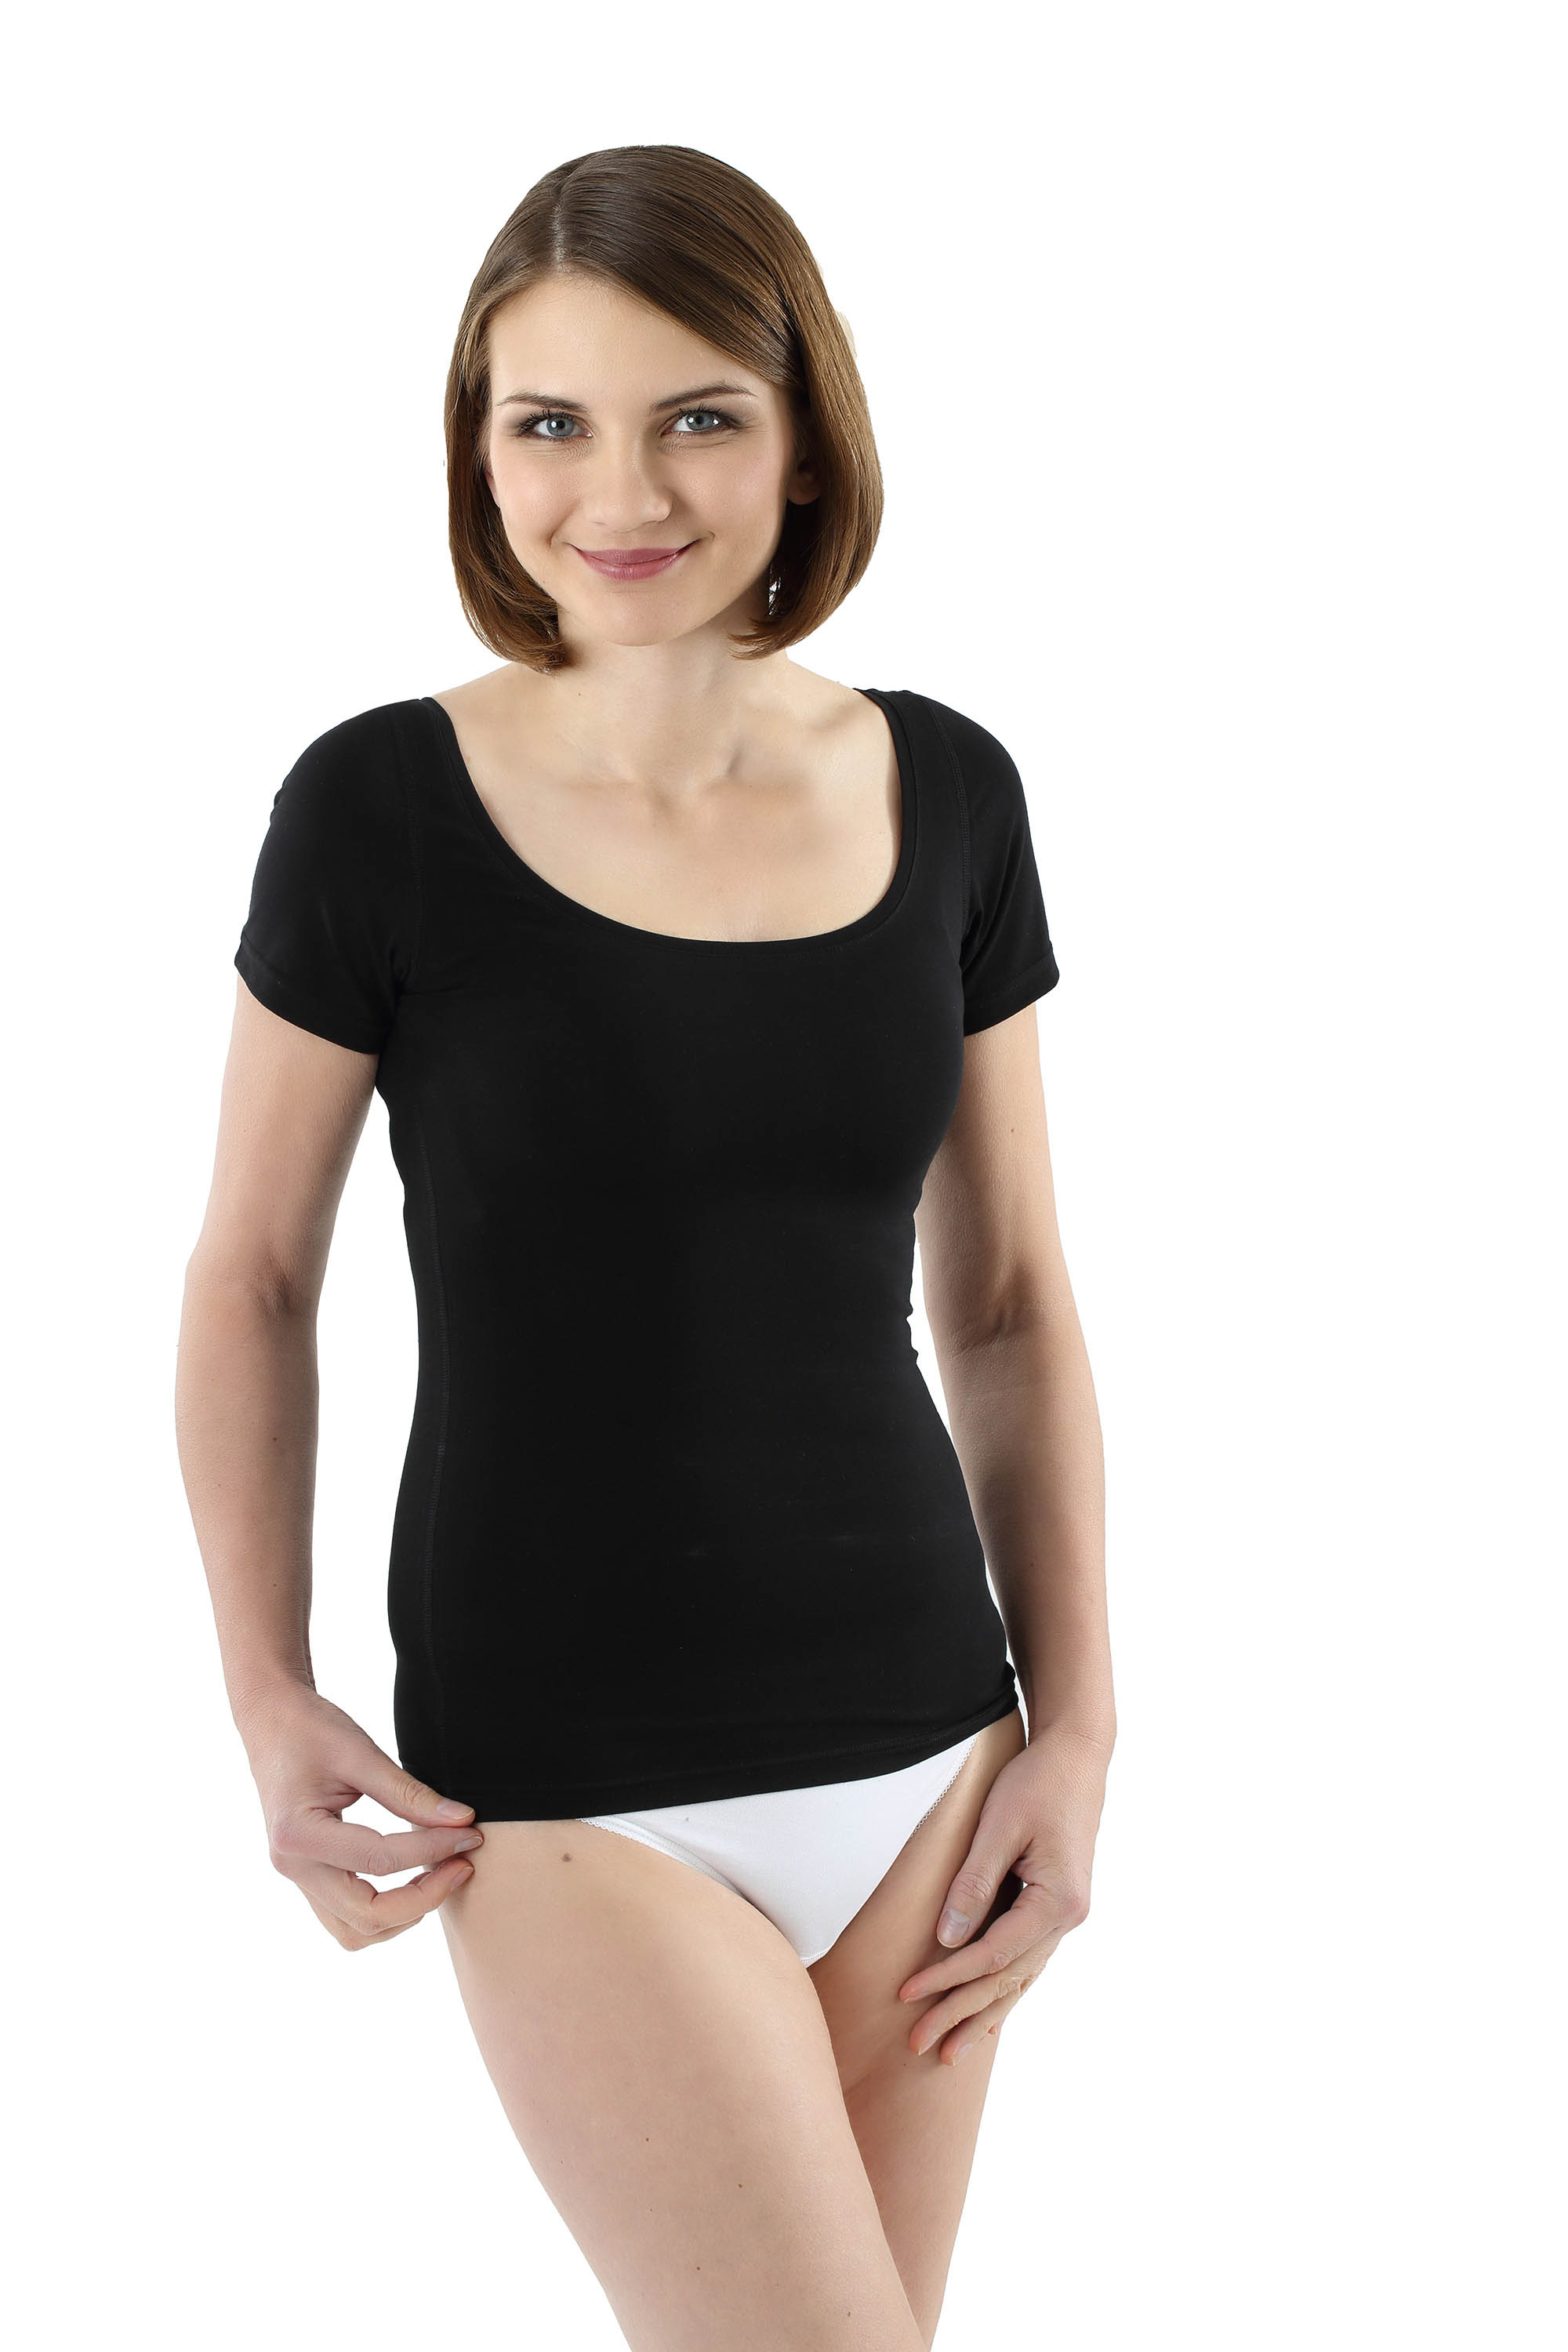 Alove Women's Cotton UnderShirts Wider Sleeve Tank Top Built-in